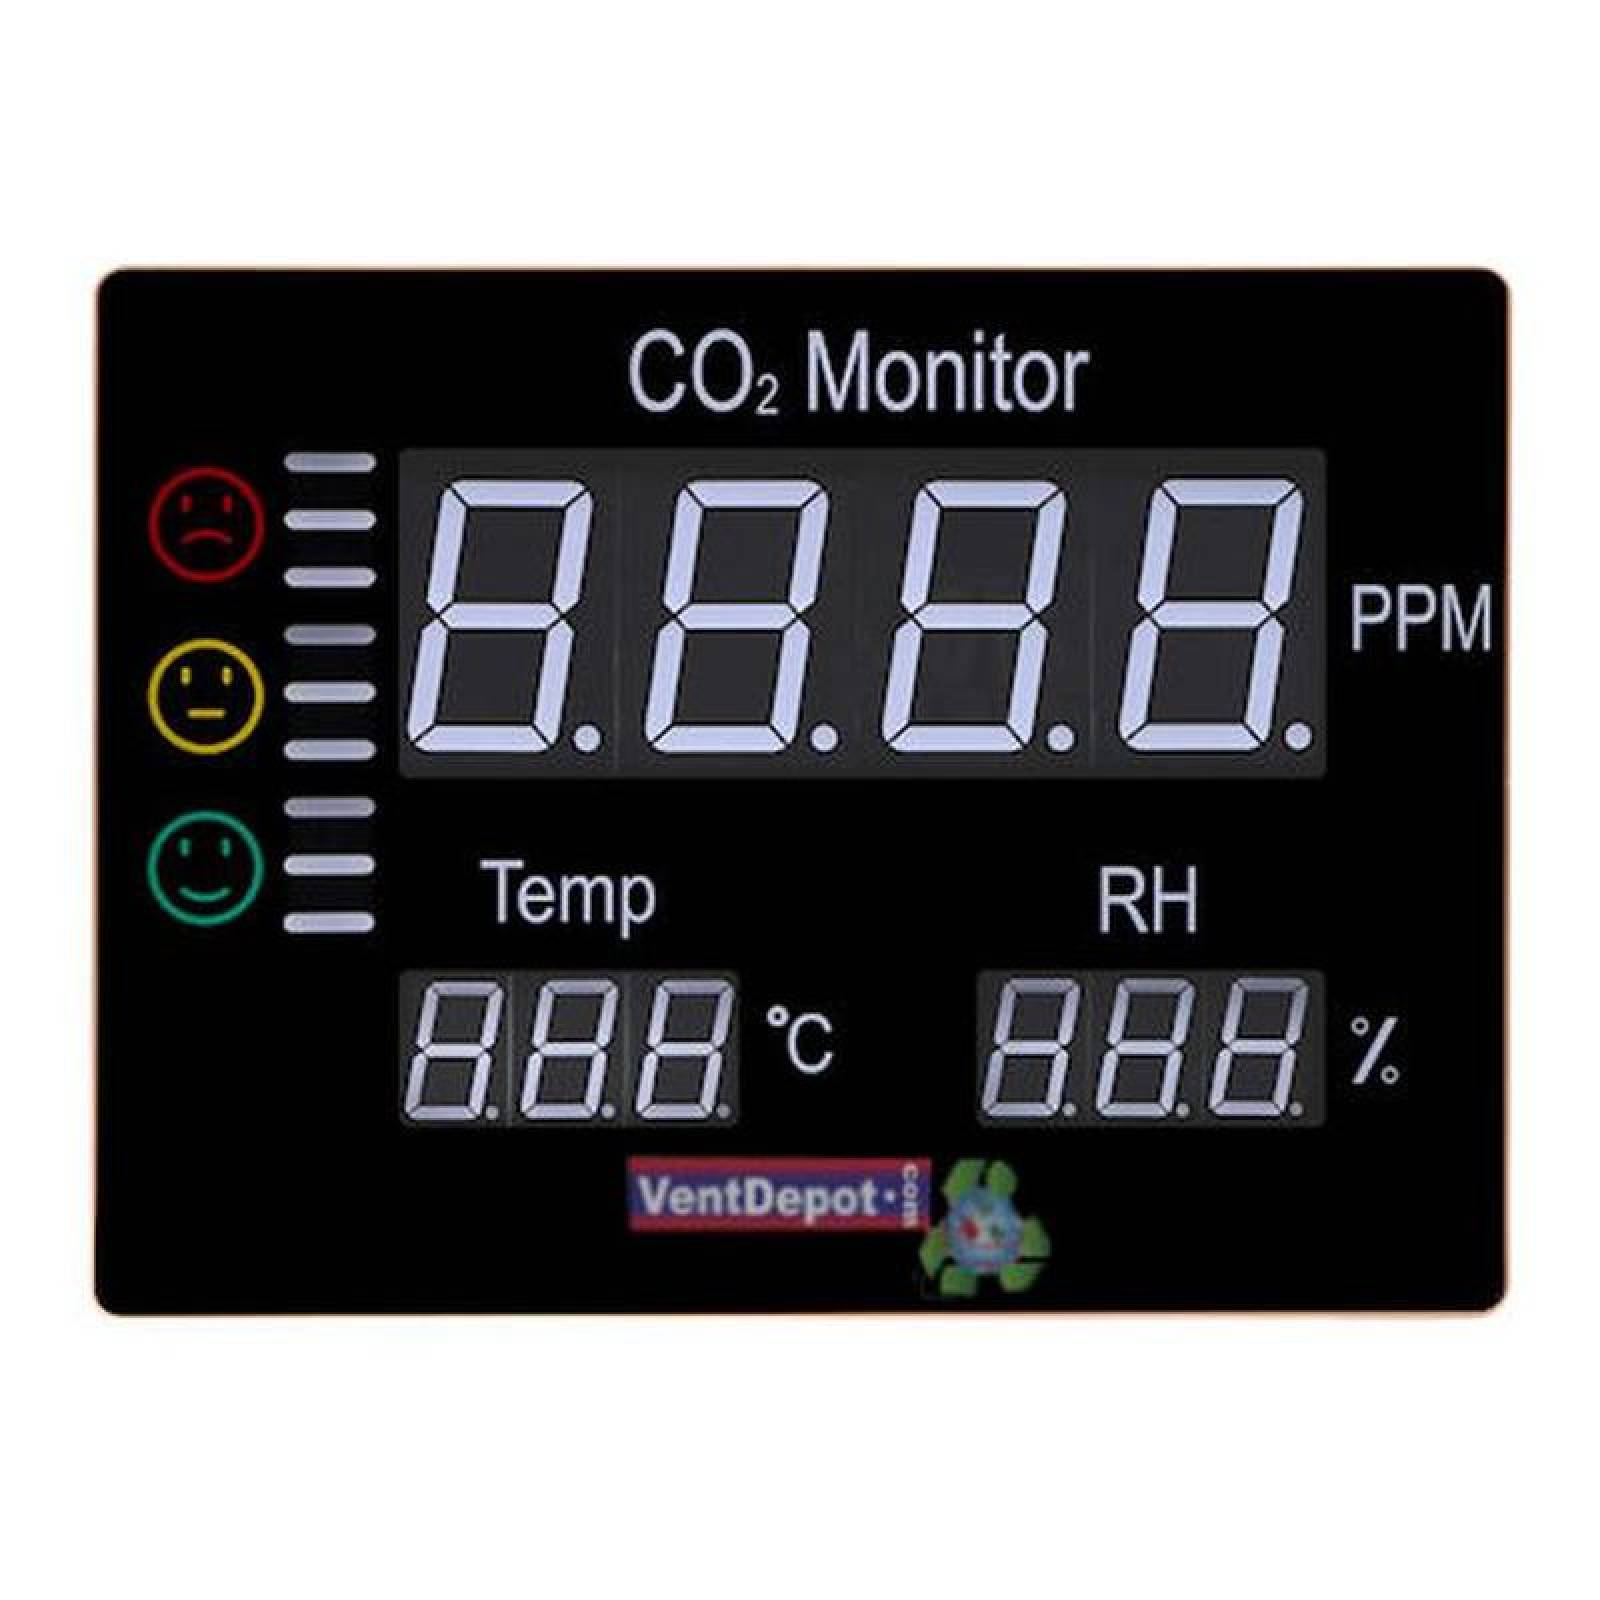 Monitor de CO2 para Oficinas MXDCX-001-11 Escala CO2 de 0 a 9999 PPMTemperatura -10 a 100CHumedad 0,1 a 99,9porciento RH 220V Consumo de energía 9V, DioxMonitor